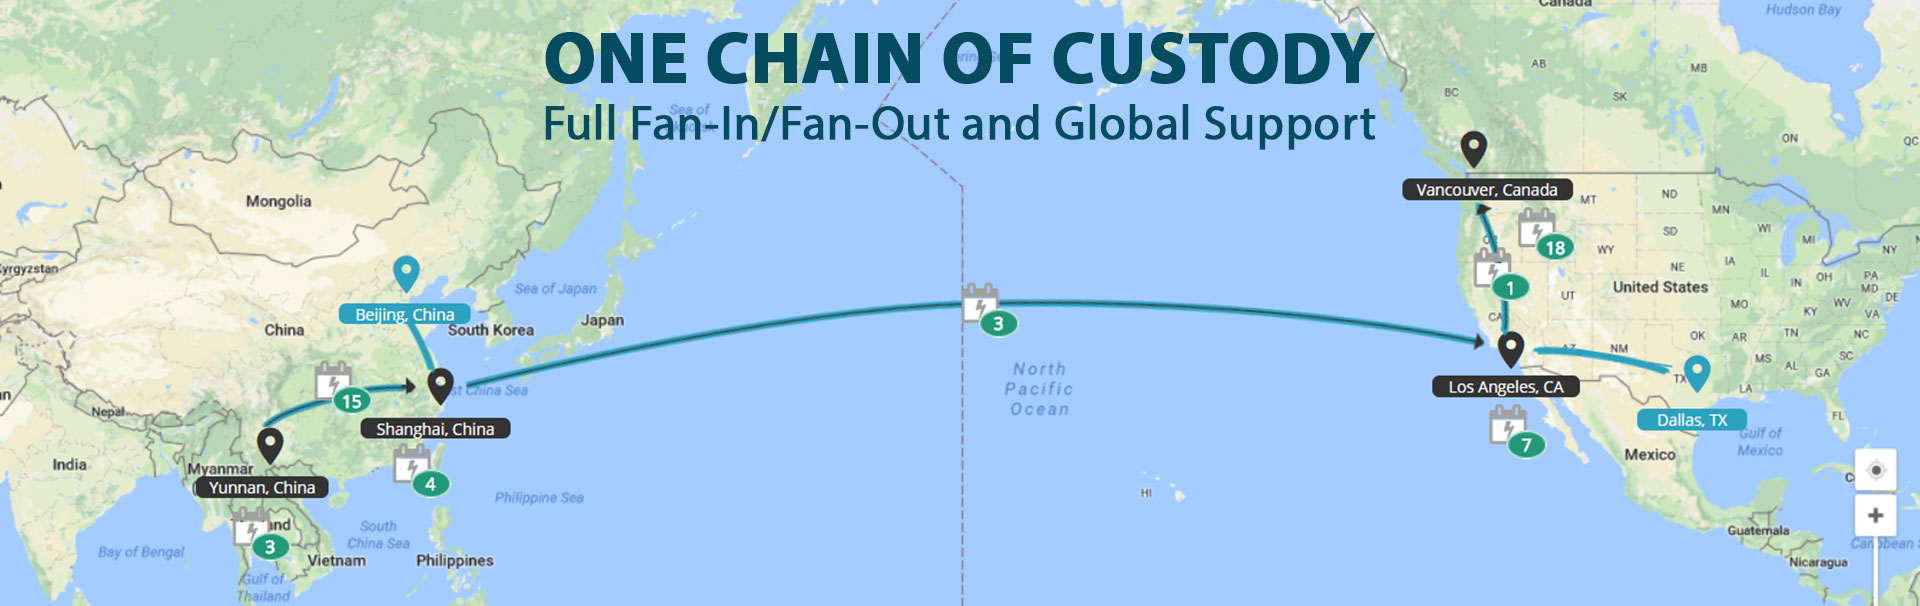 Chain of Custody in Supply Chain Management